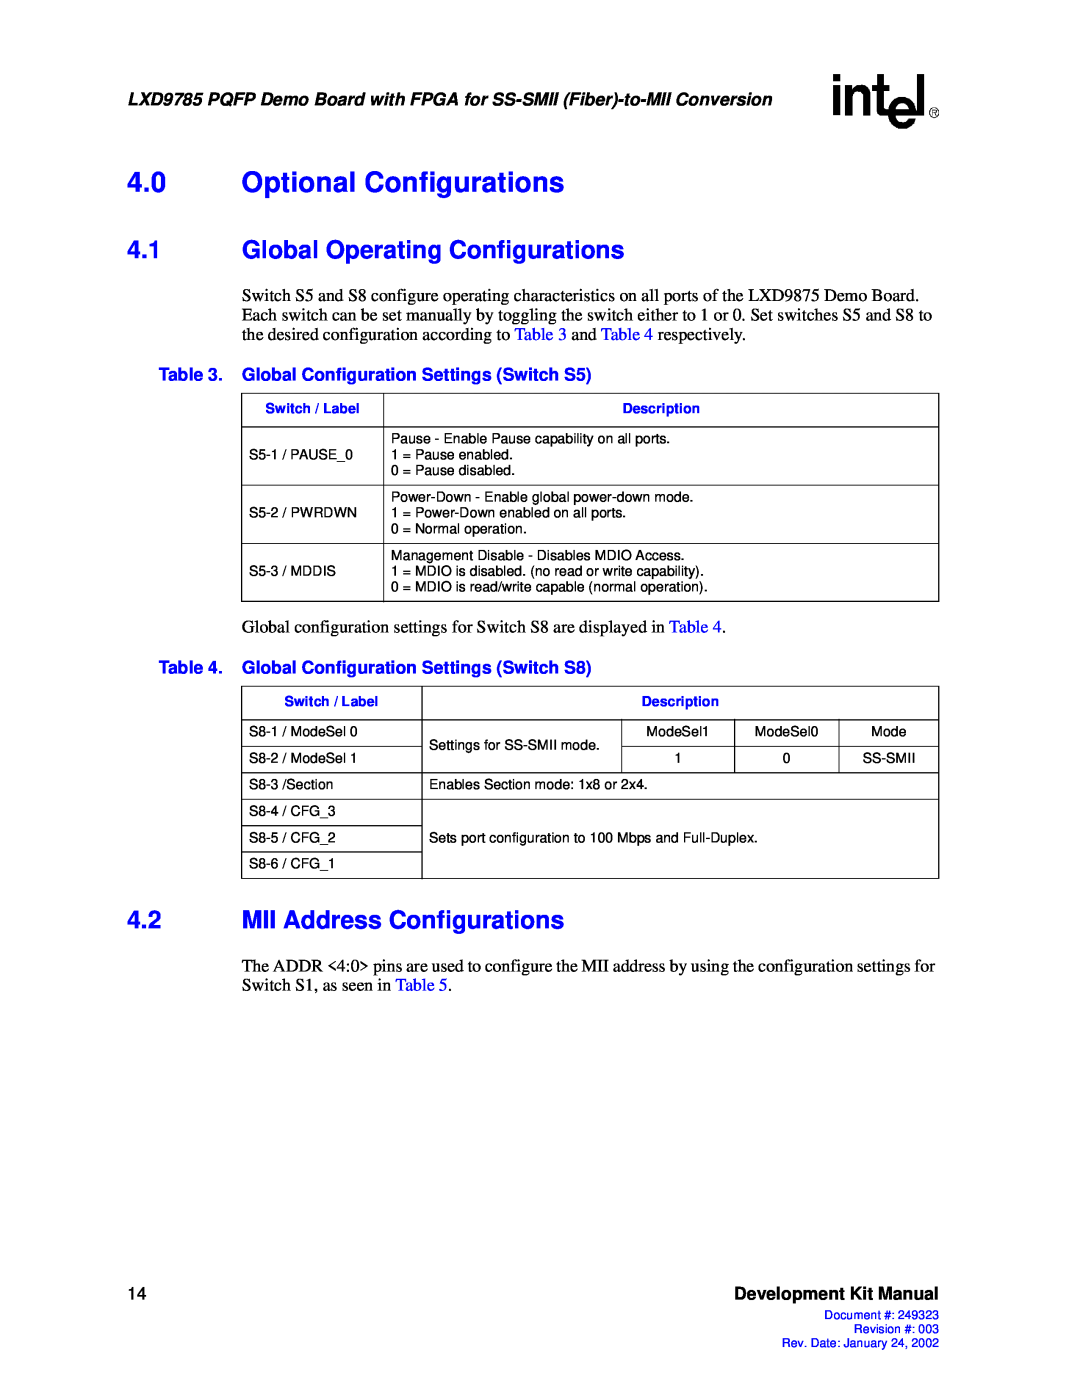 Intel 249323-003 manual Optional Configurations, Global Operating Configurations, MII Address Configurations 